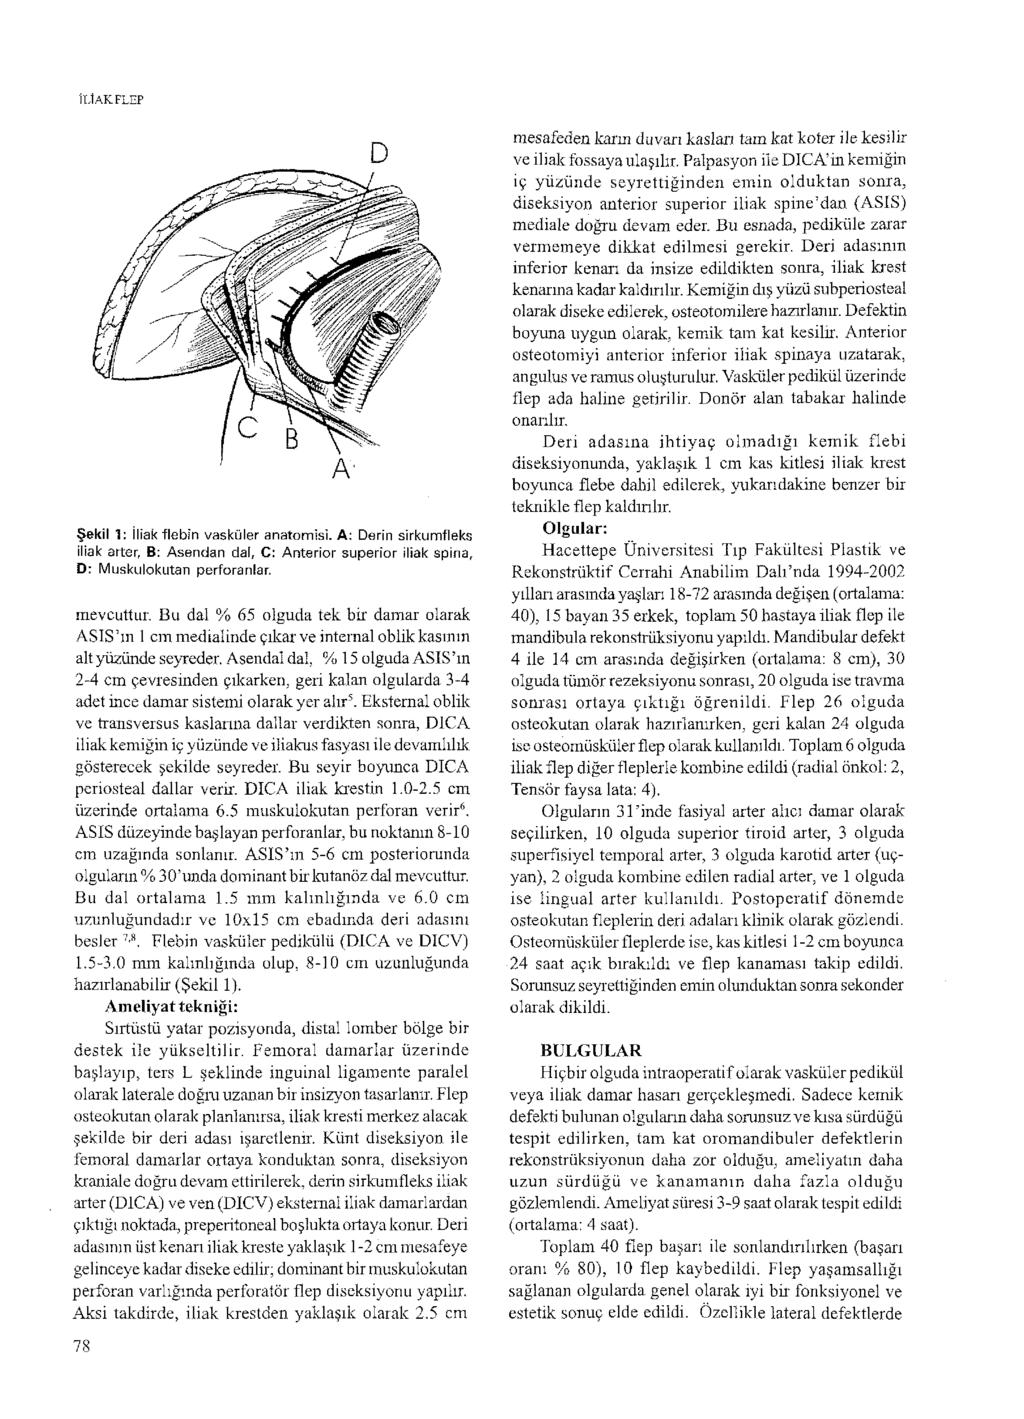 İ Lİ AK FLEP D Şekil 1: İliakflebin vasküler anatomisi. A: Derin sirkumfleks iliak arter, B: Asendan dai, C: Anterior superior iliak spina, D: Muskul o kutan perforaniar. mevcuttur.